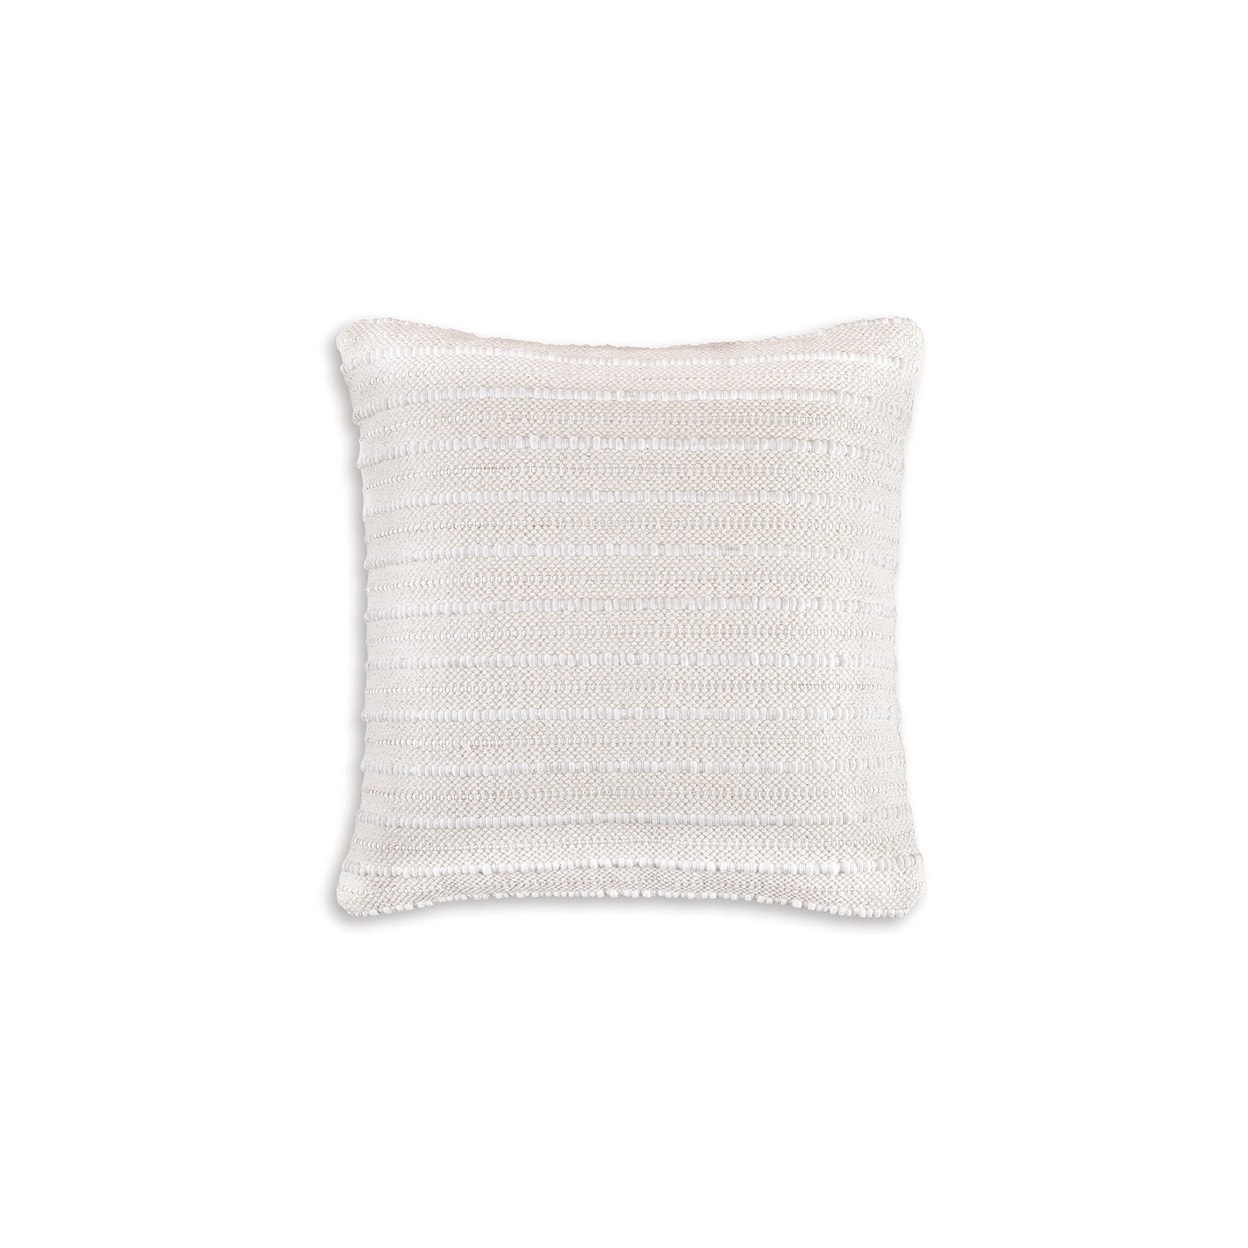 Benchcraft Theban Pillow (Set of 4)